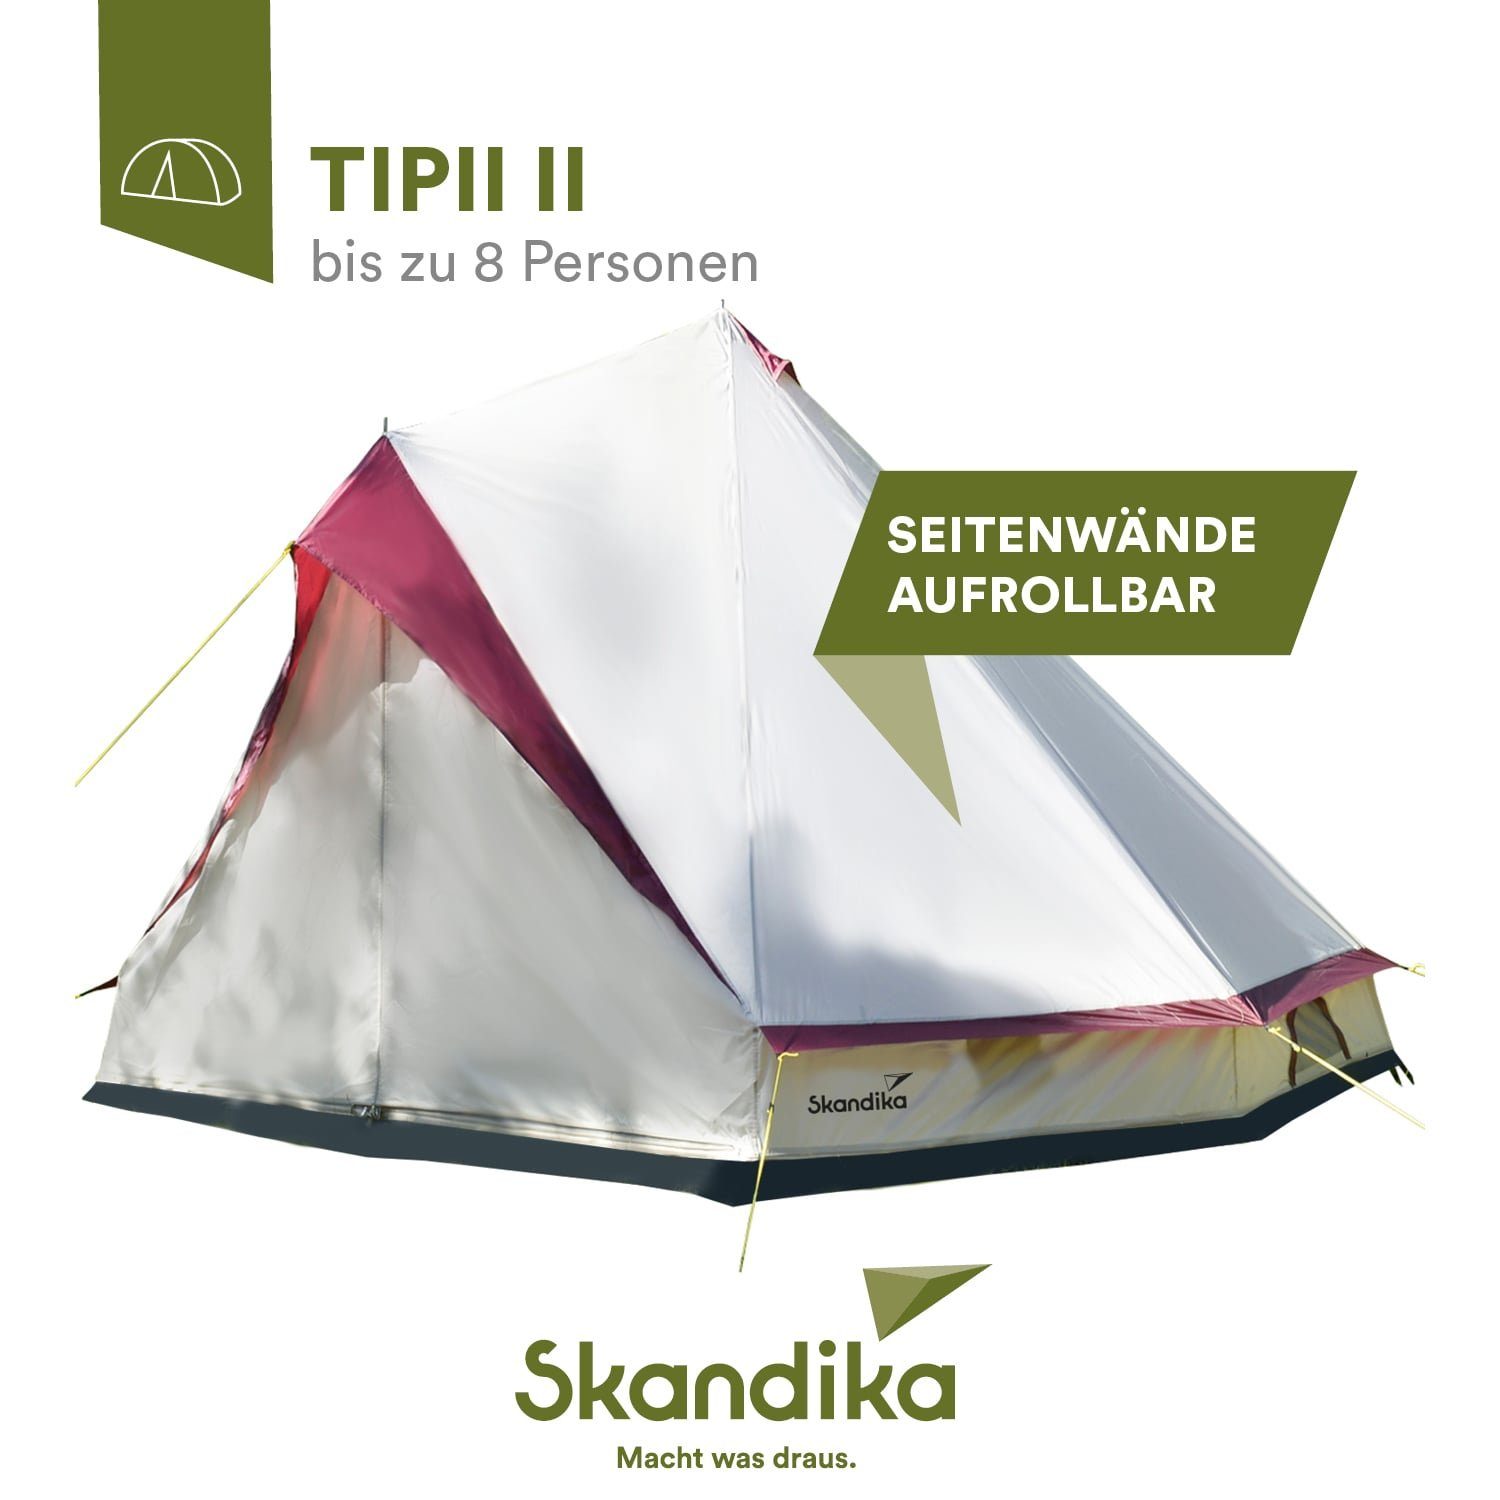 8 Tipi-Zelt Partyzelt, Tipi Campingzelt Skandika Grau, Farbe: 8, II Personen: